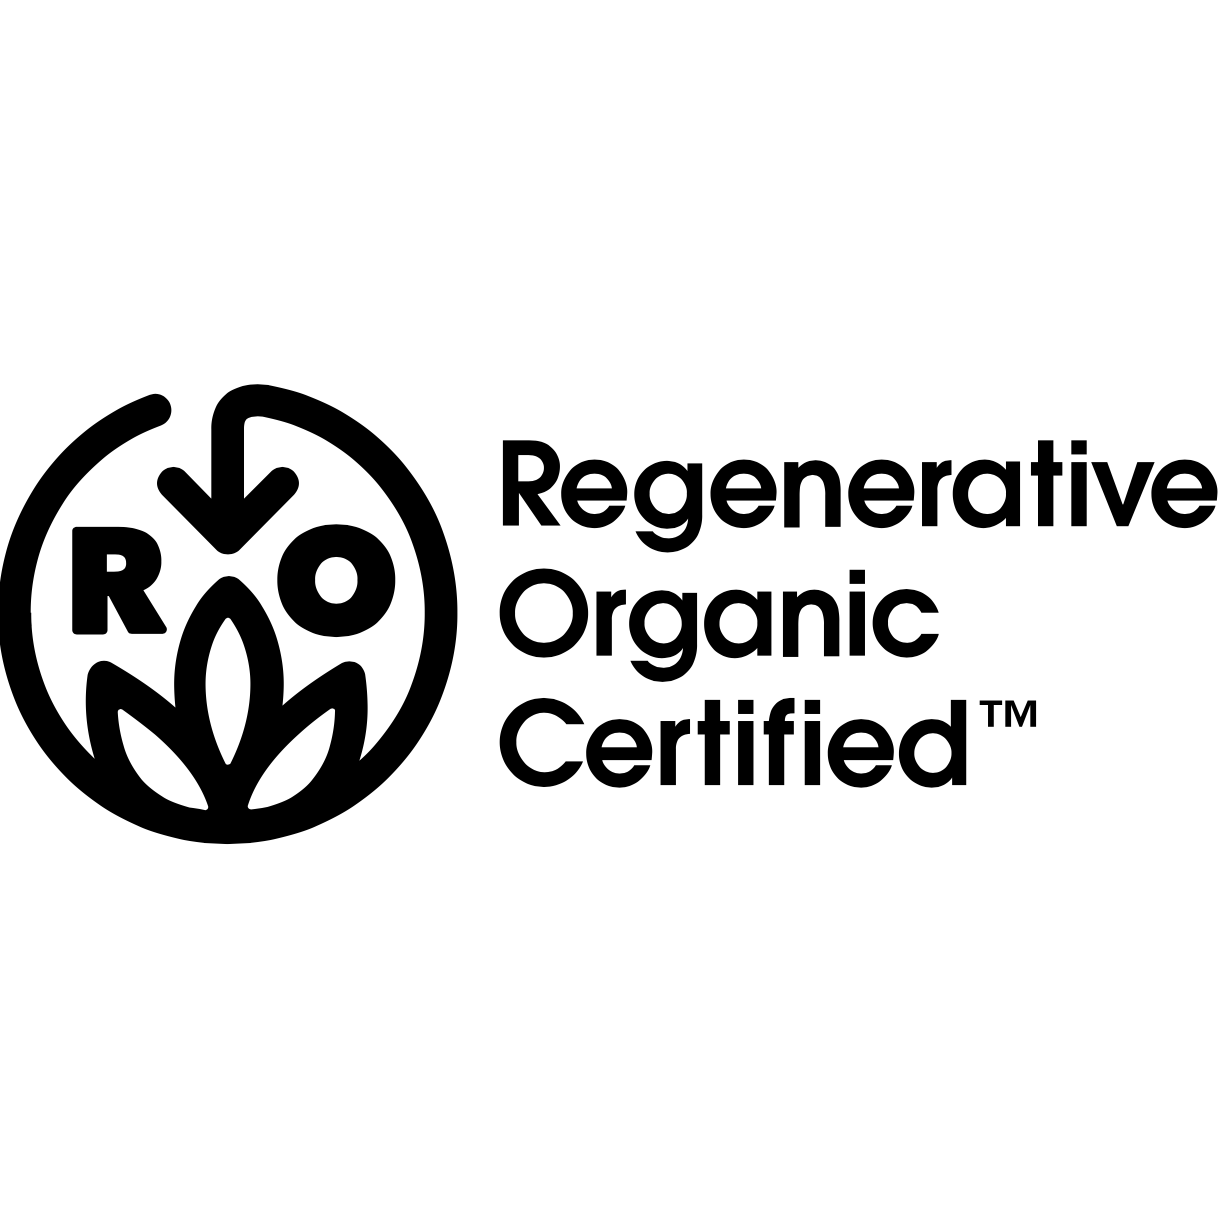 ROC™ - Regenerative Organic Certified - Control Union Global